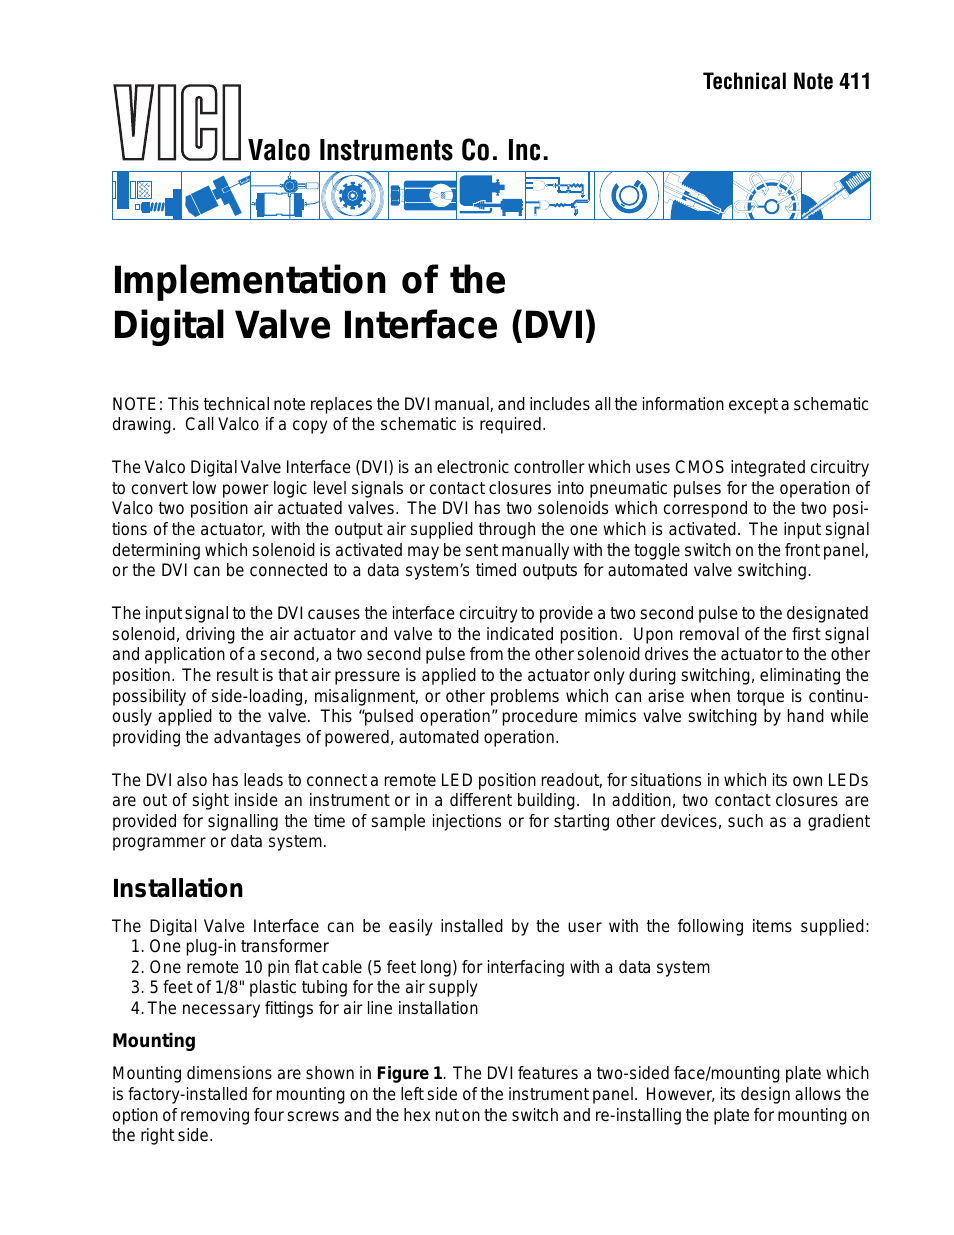 Digital Valve Interface (DVI)